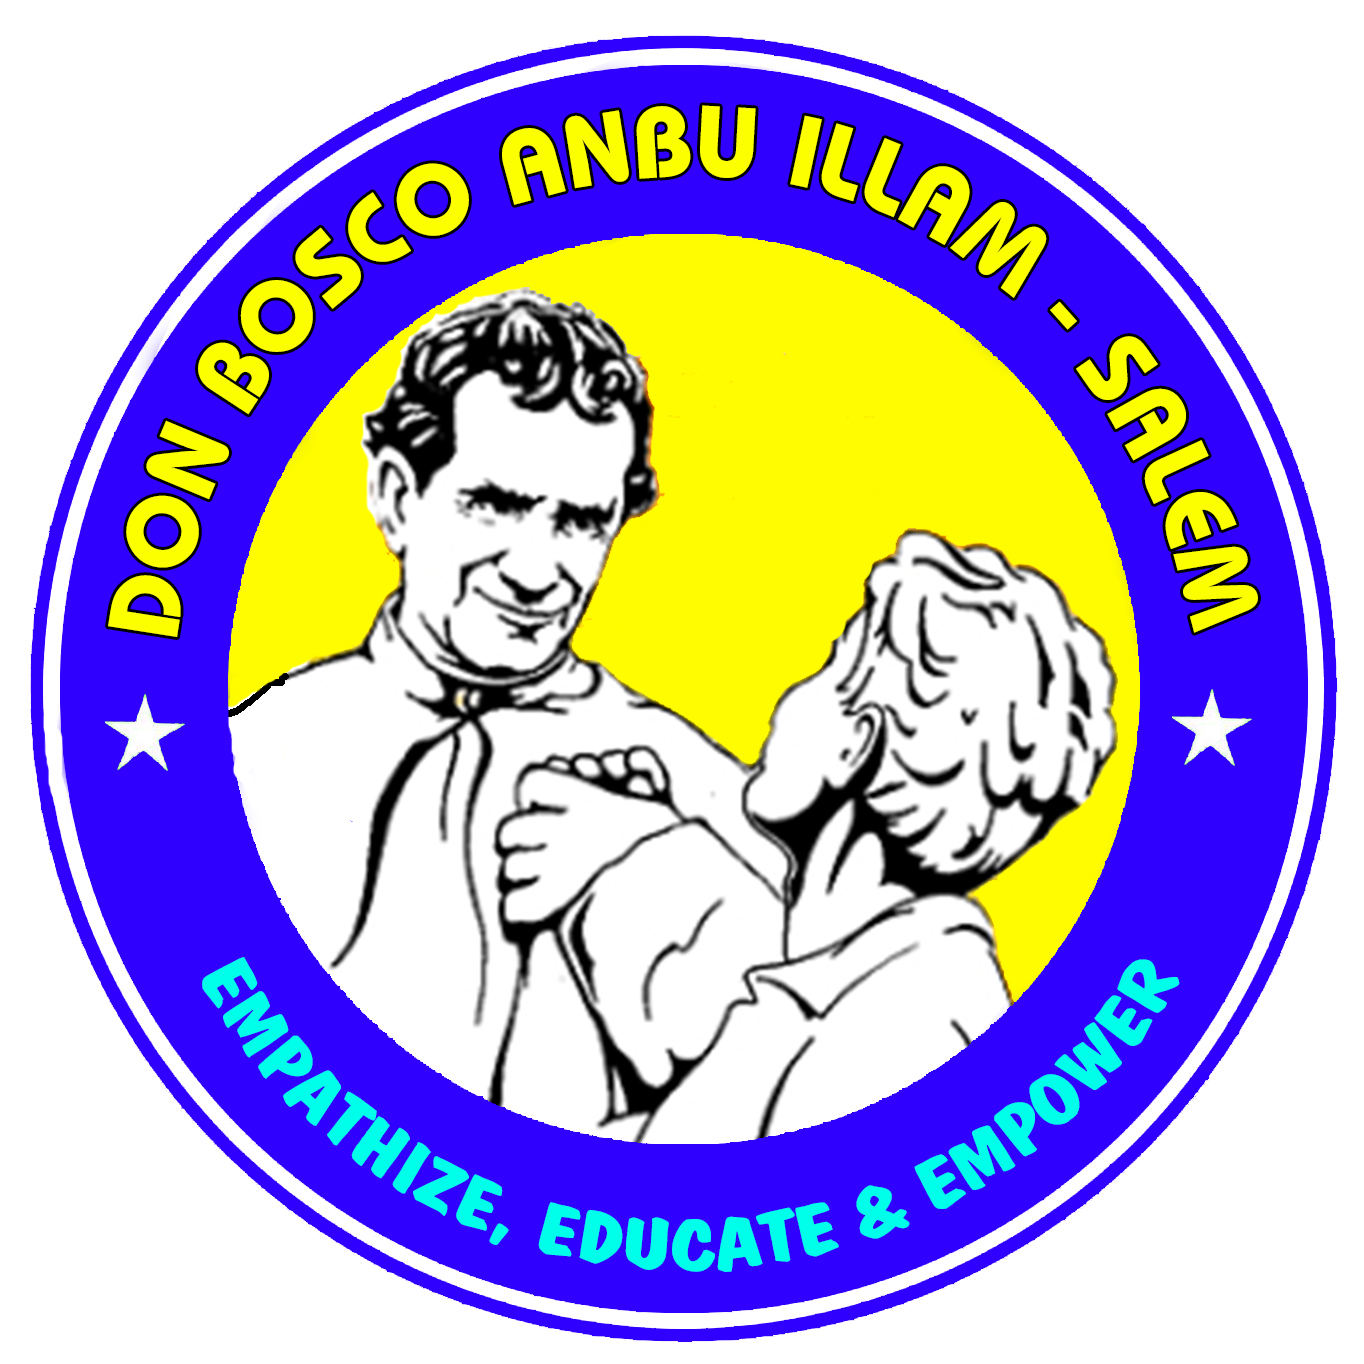 The Salem Don Bosco Anbu Illam Social Service Society logo